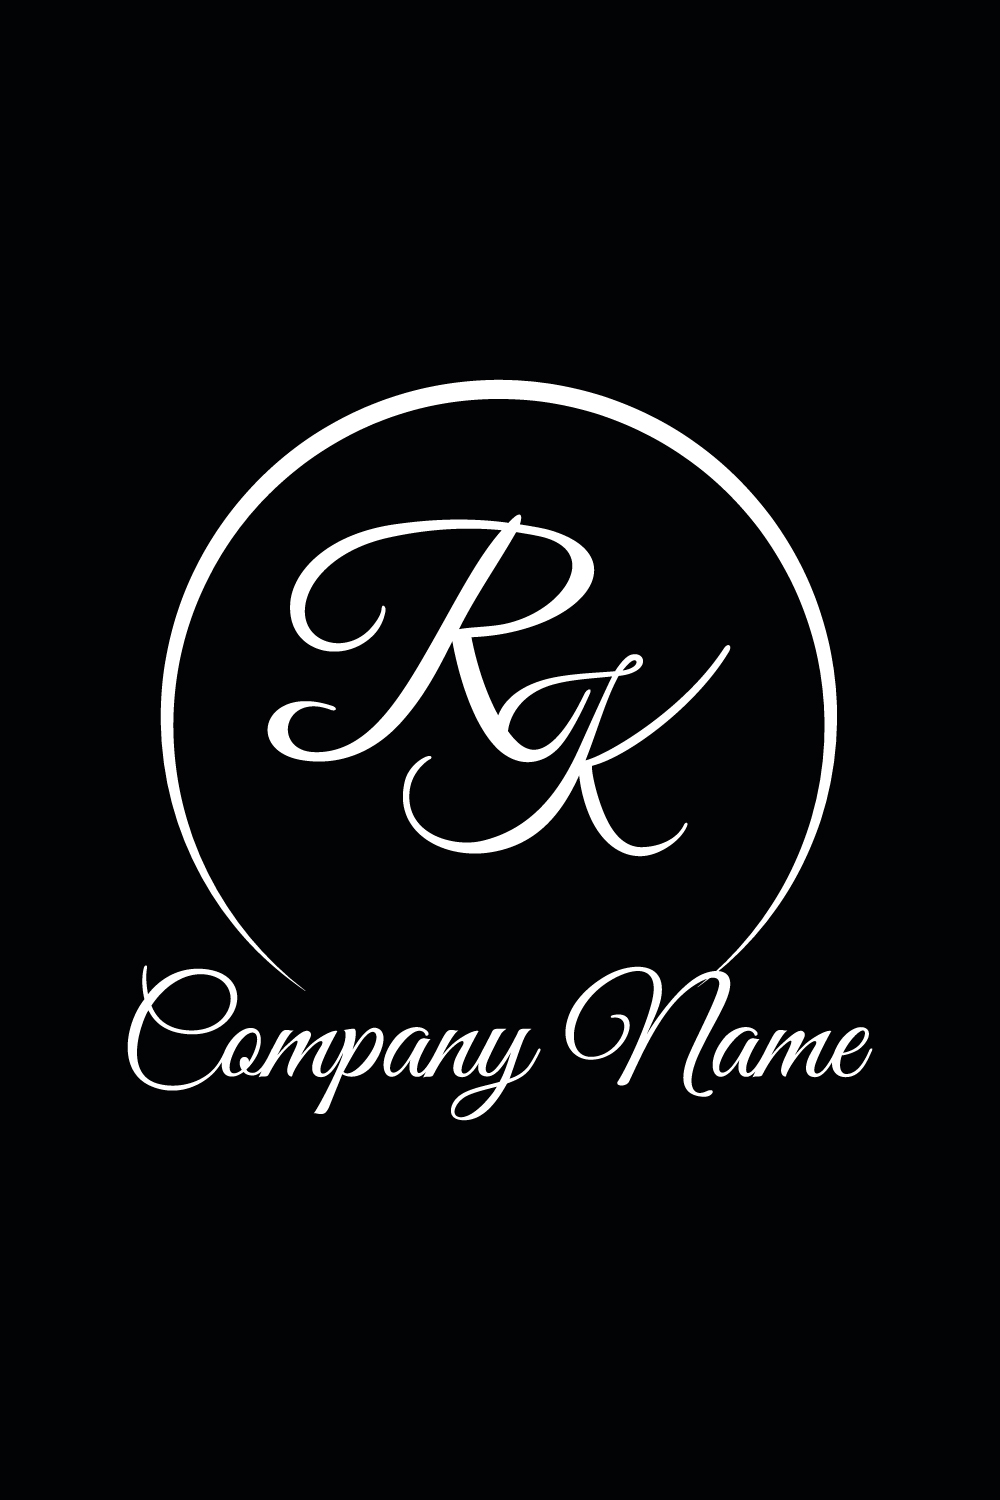 Initials RK letters logo design vector template images RK logo best circle signature fond logo pinterest preview image.